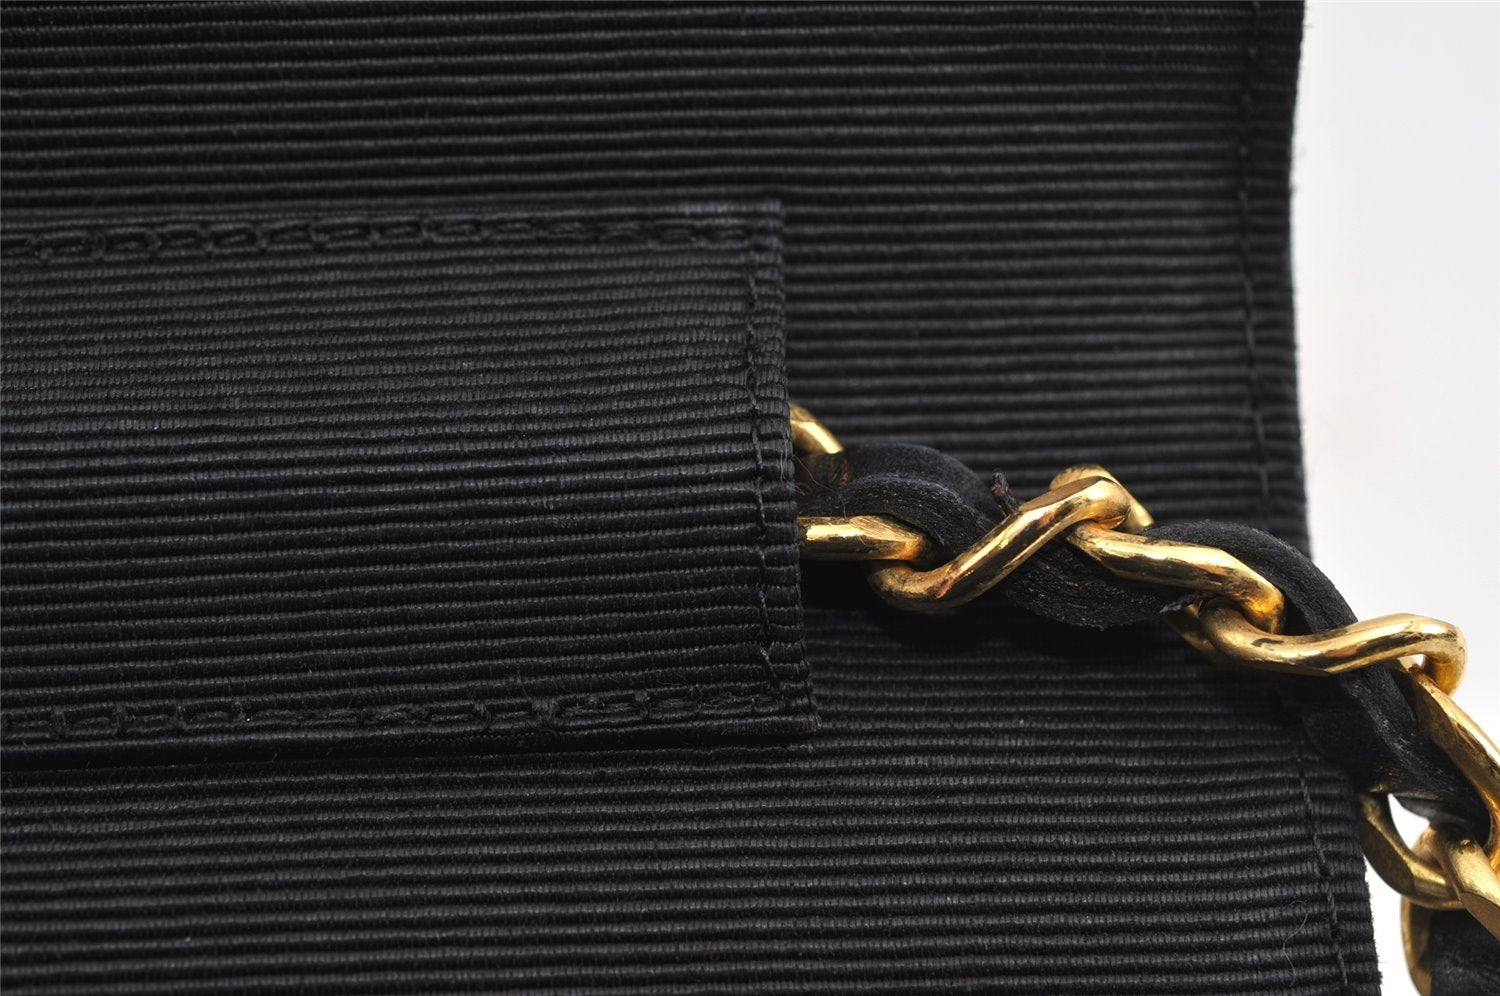 Auth CHANEL Mademoiselle Velour Leather Chain Shoulder Bag Purse Black 5663I